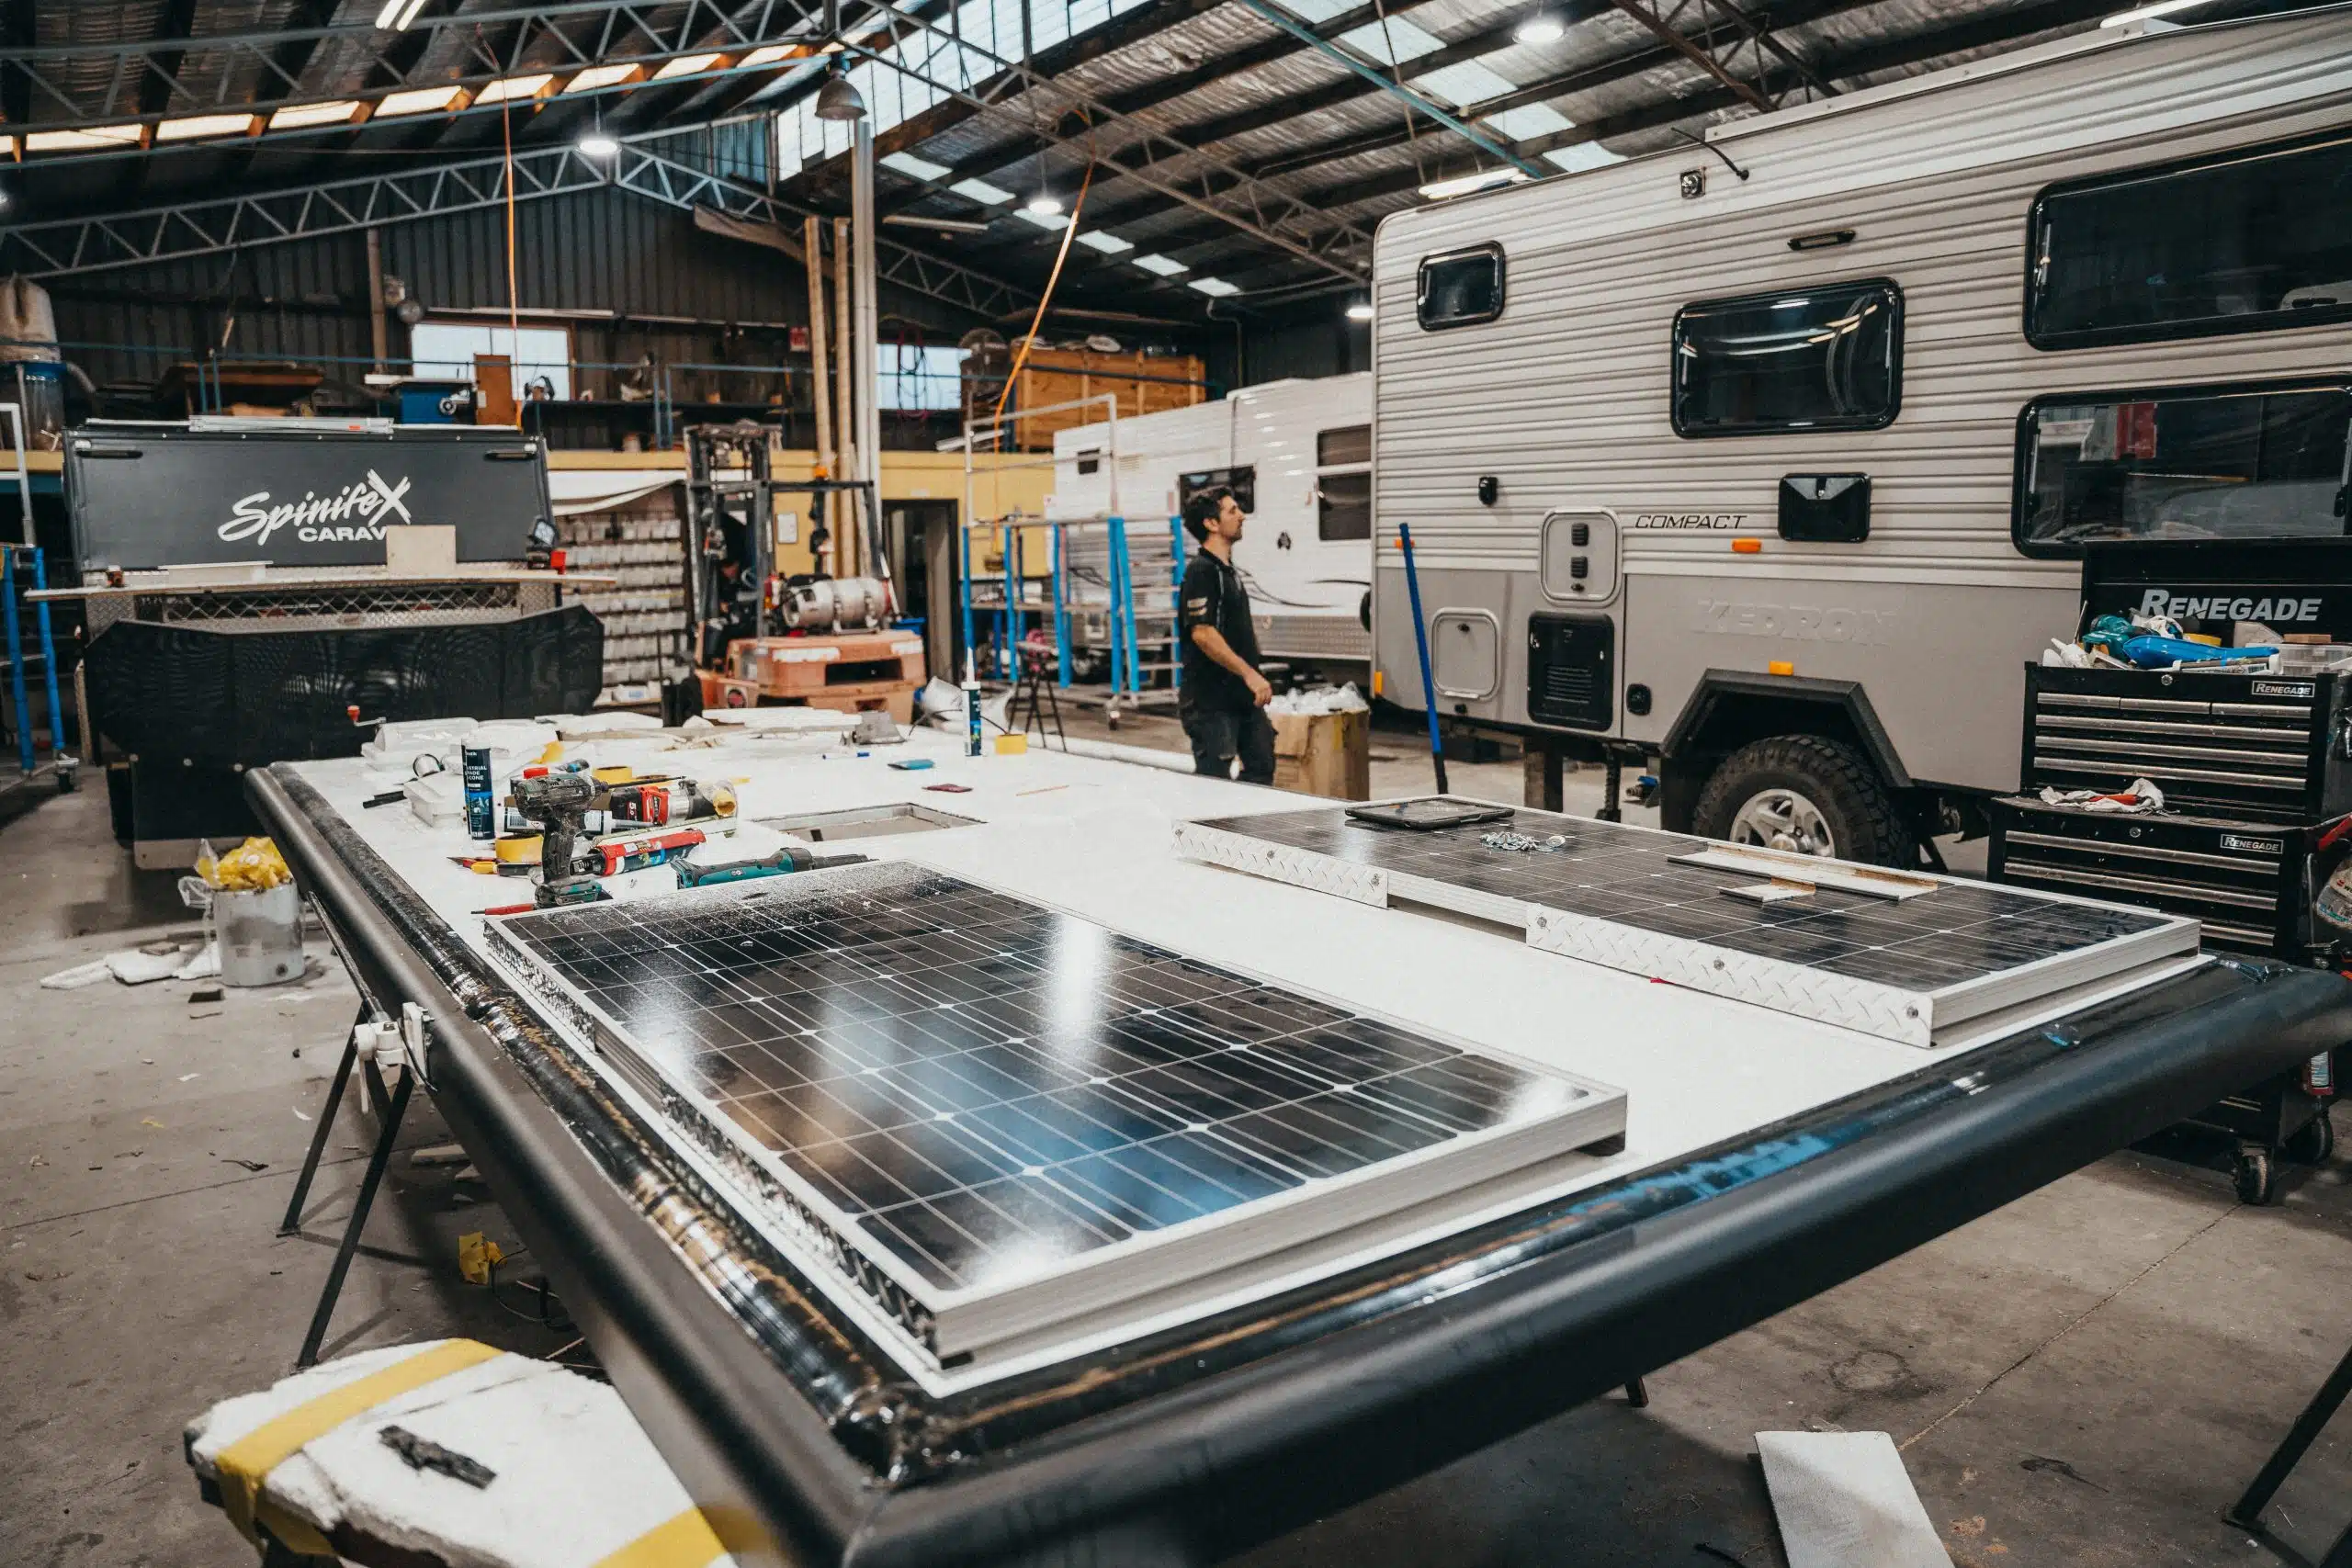 Caravan solar panel maintenance: Technician inspects or repairs panels for optimal performance